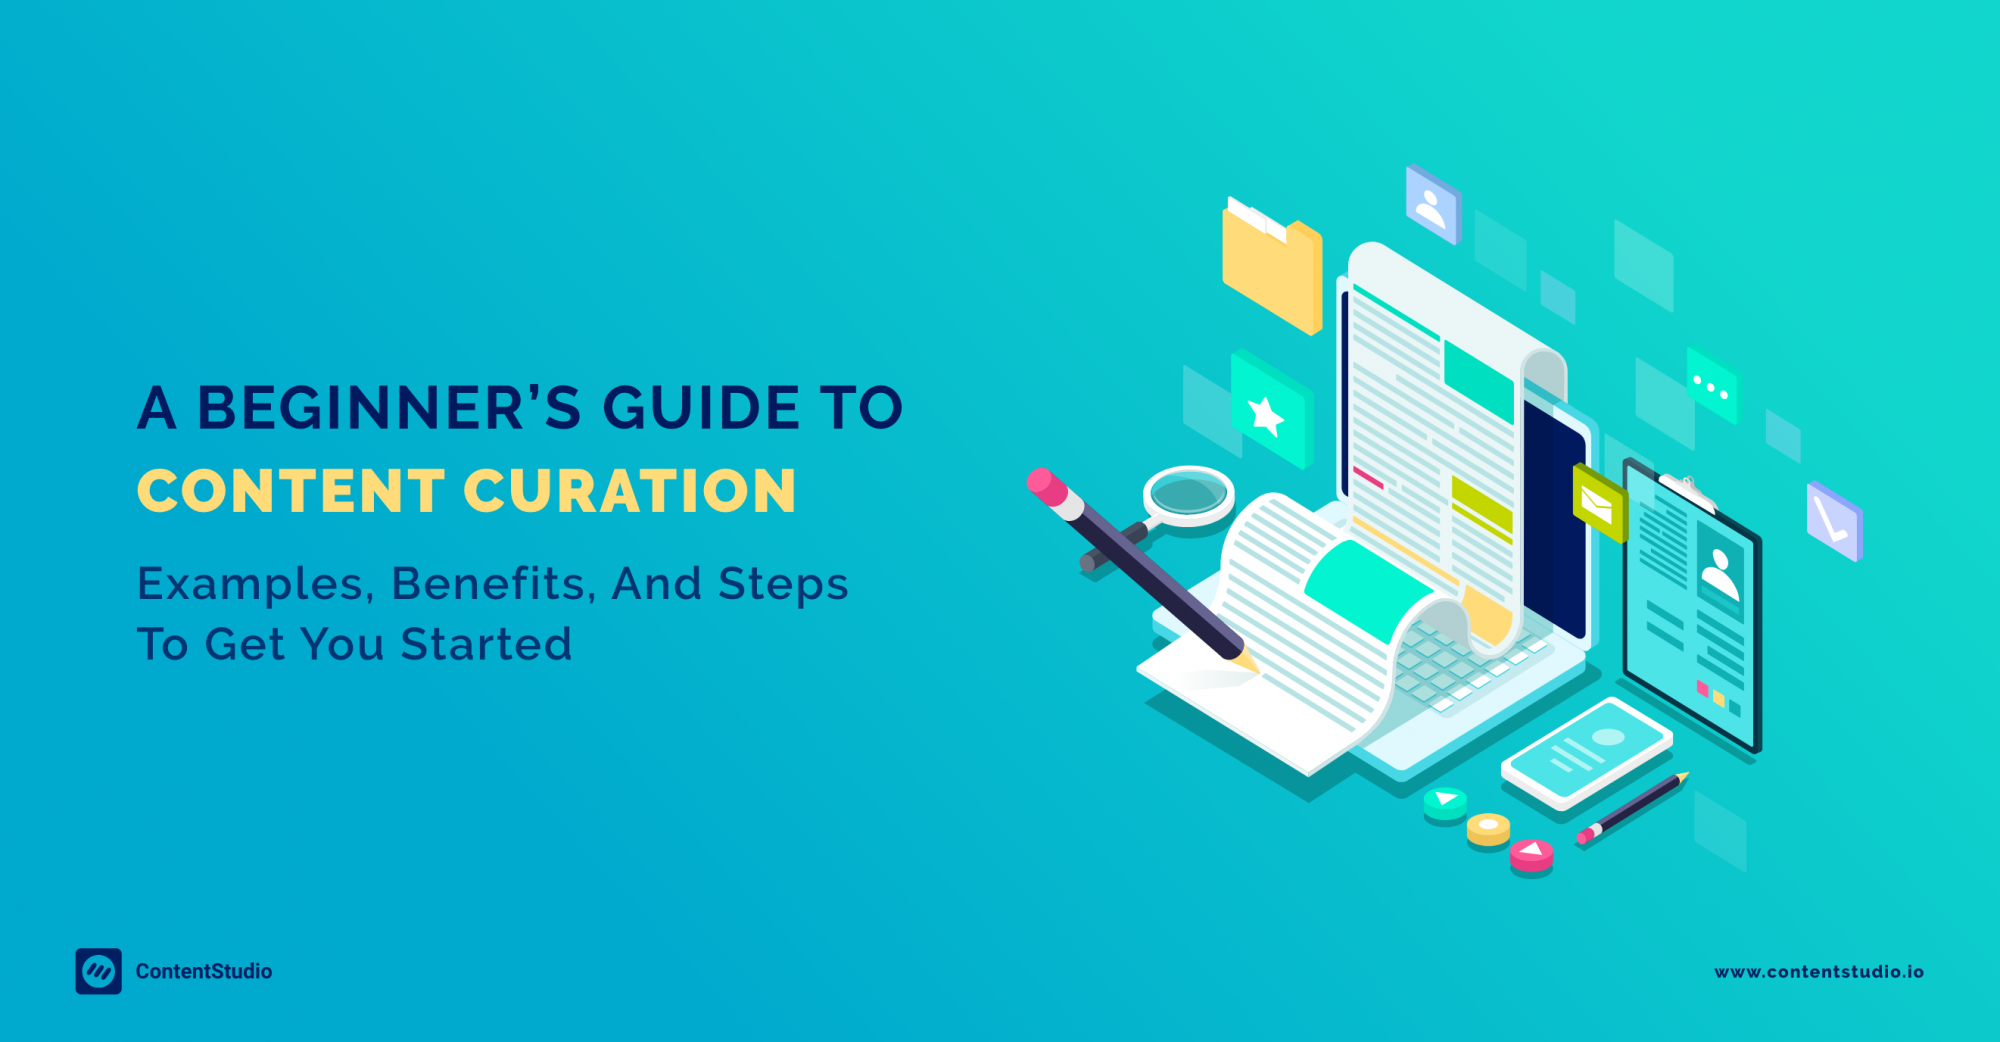 content curation guide - ContentStudio